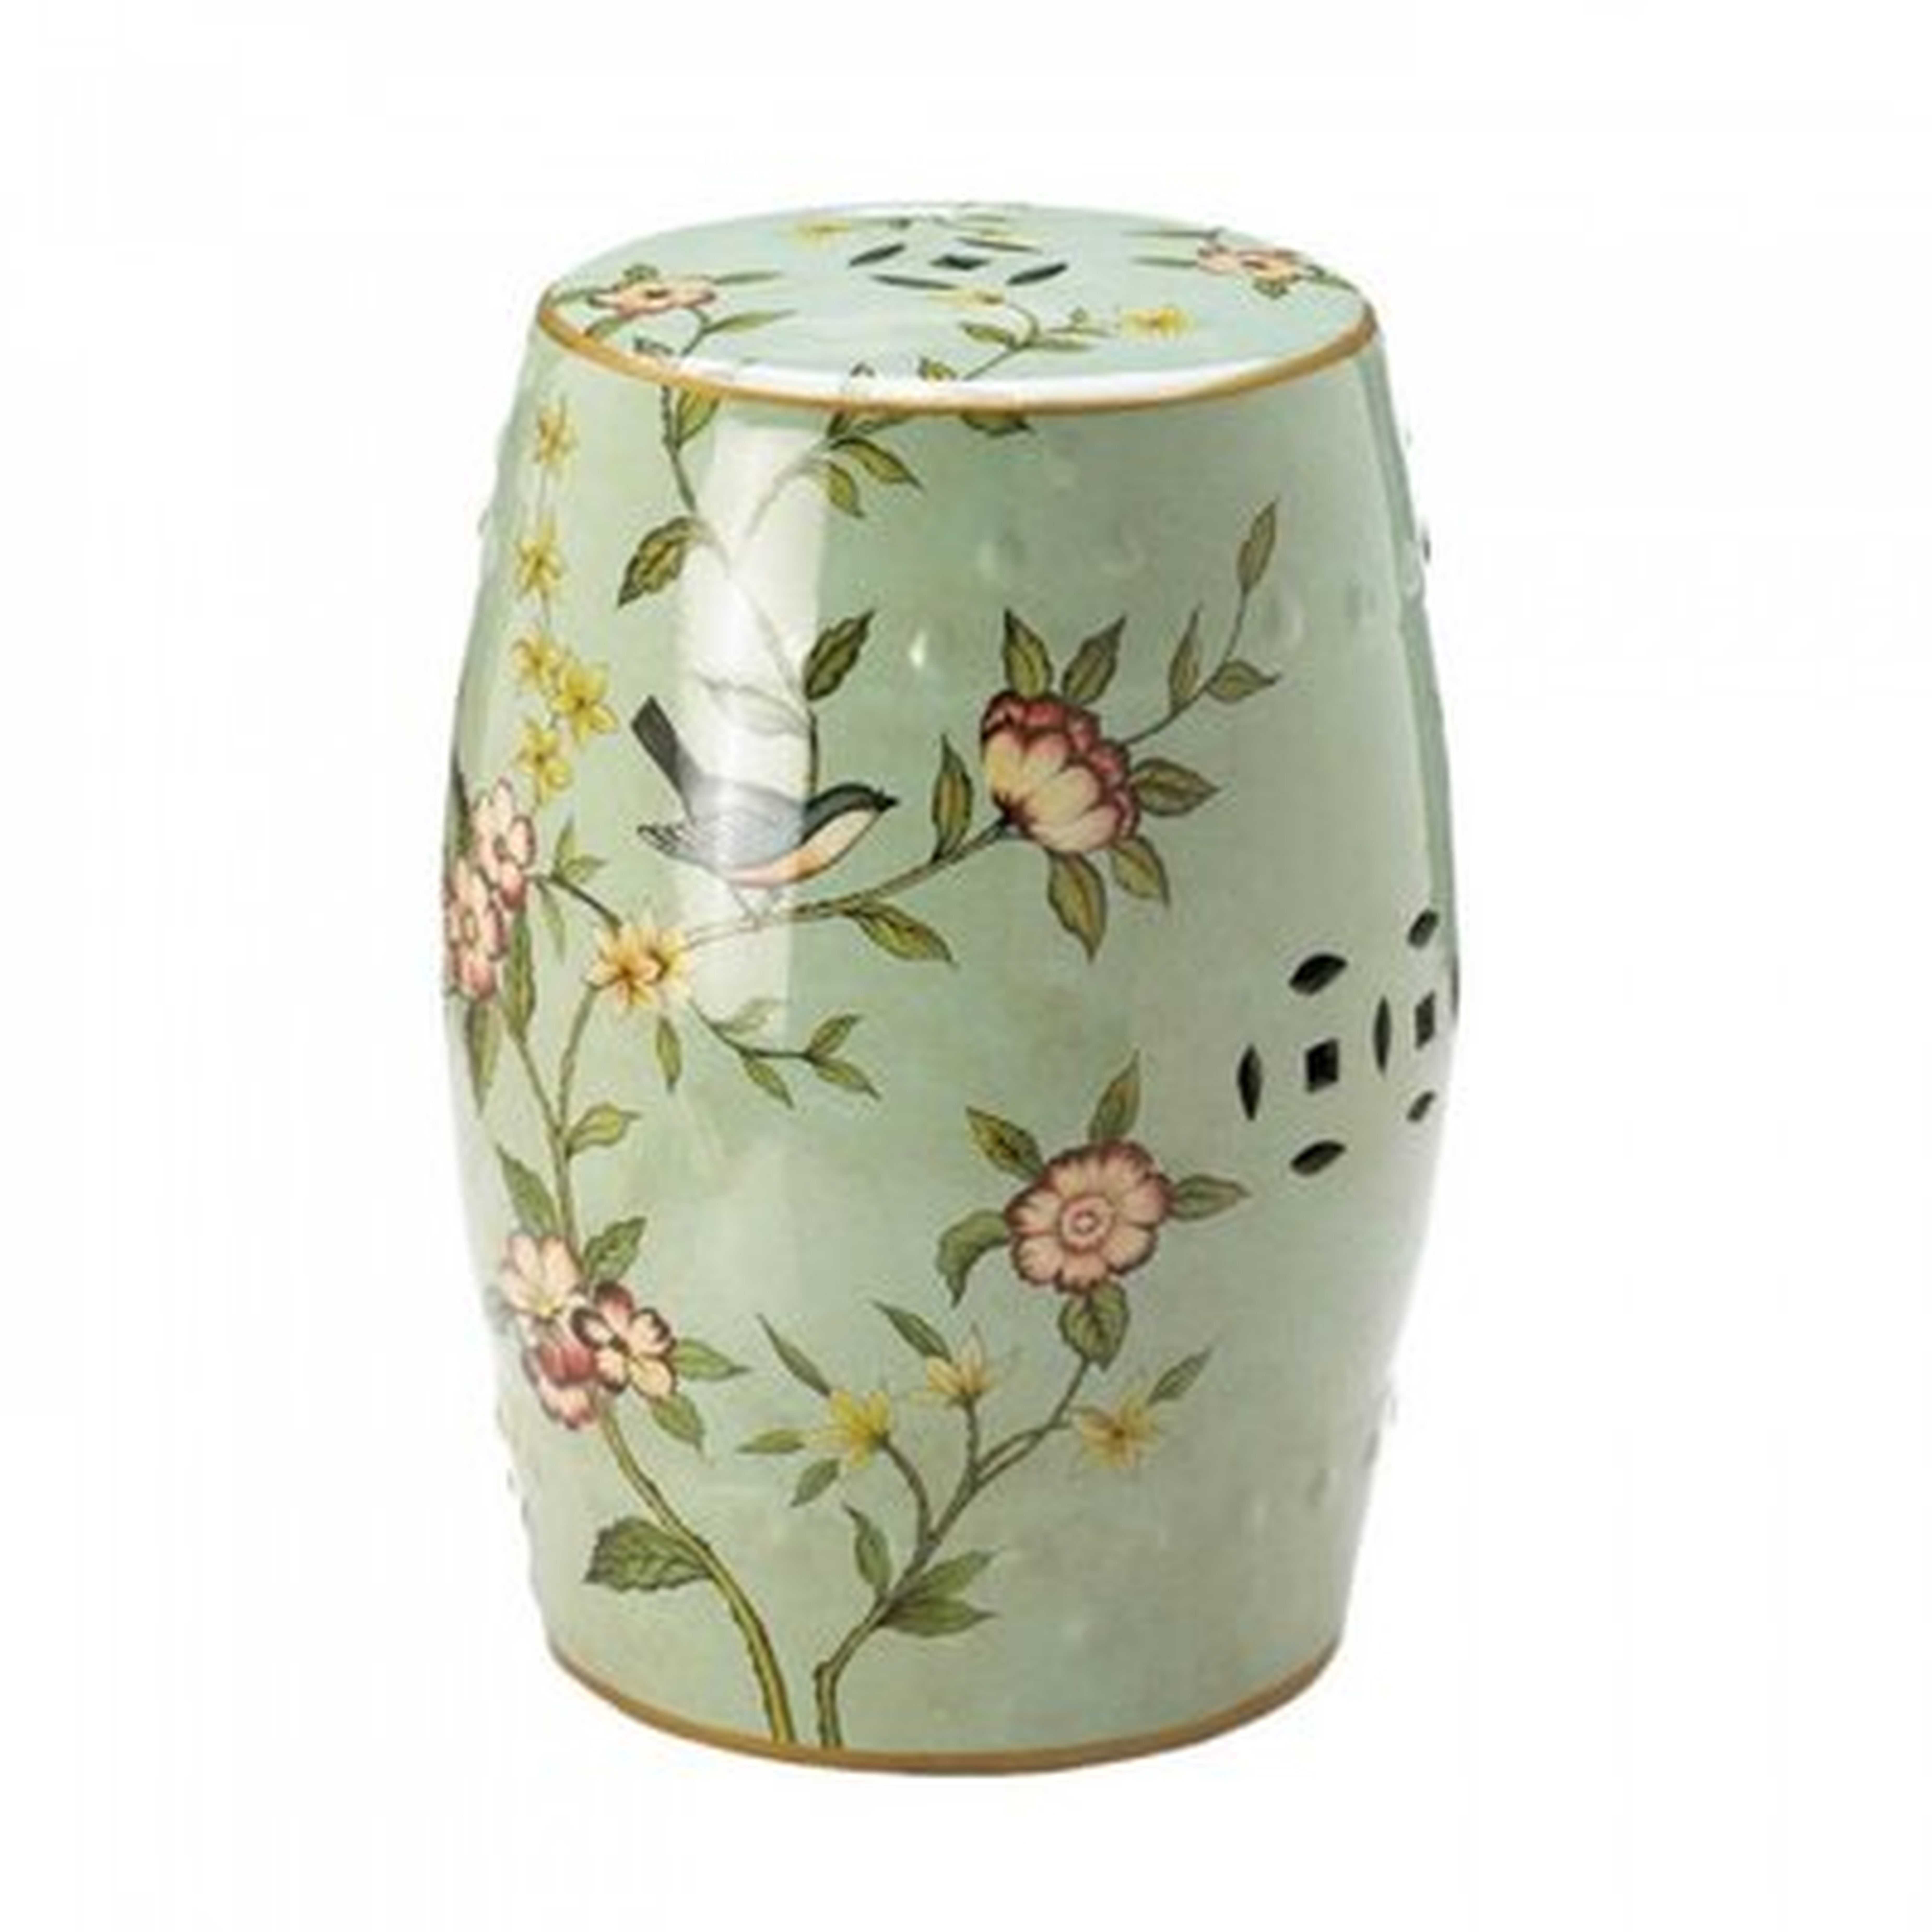 Ceramic Floral Stool - Wayfair